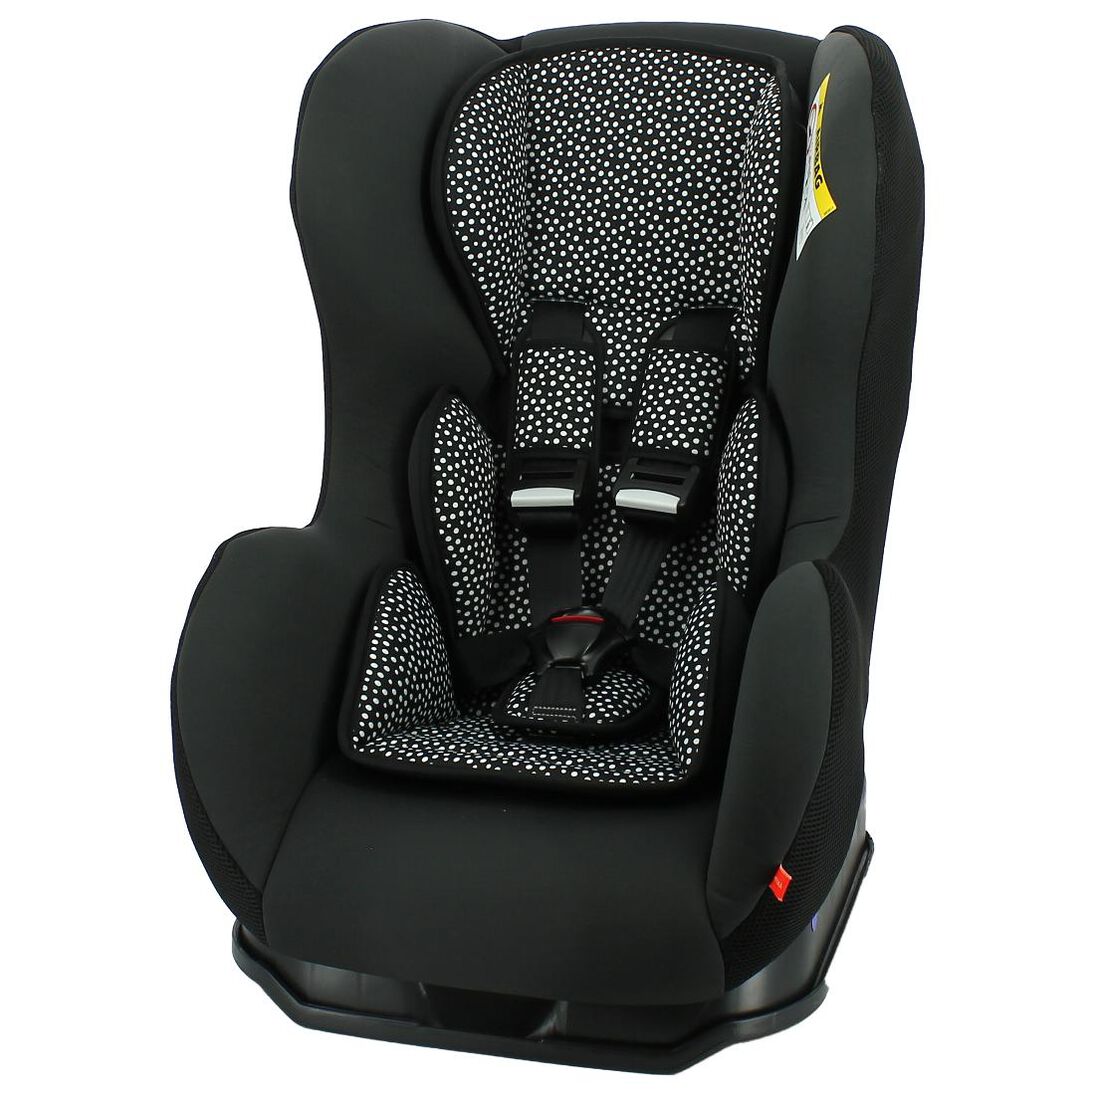 Buskruit Plotselinge afdaling entiteit autostoel baby 0-25kg zwart/witte stip - HEMA